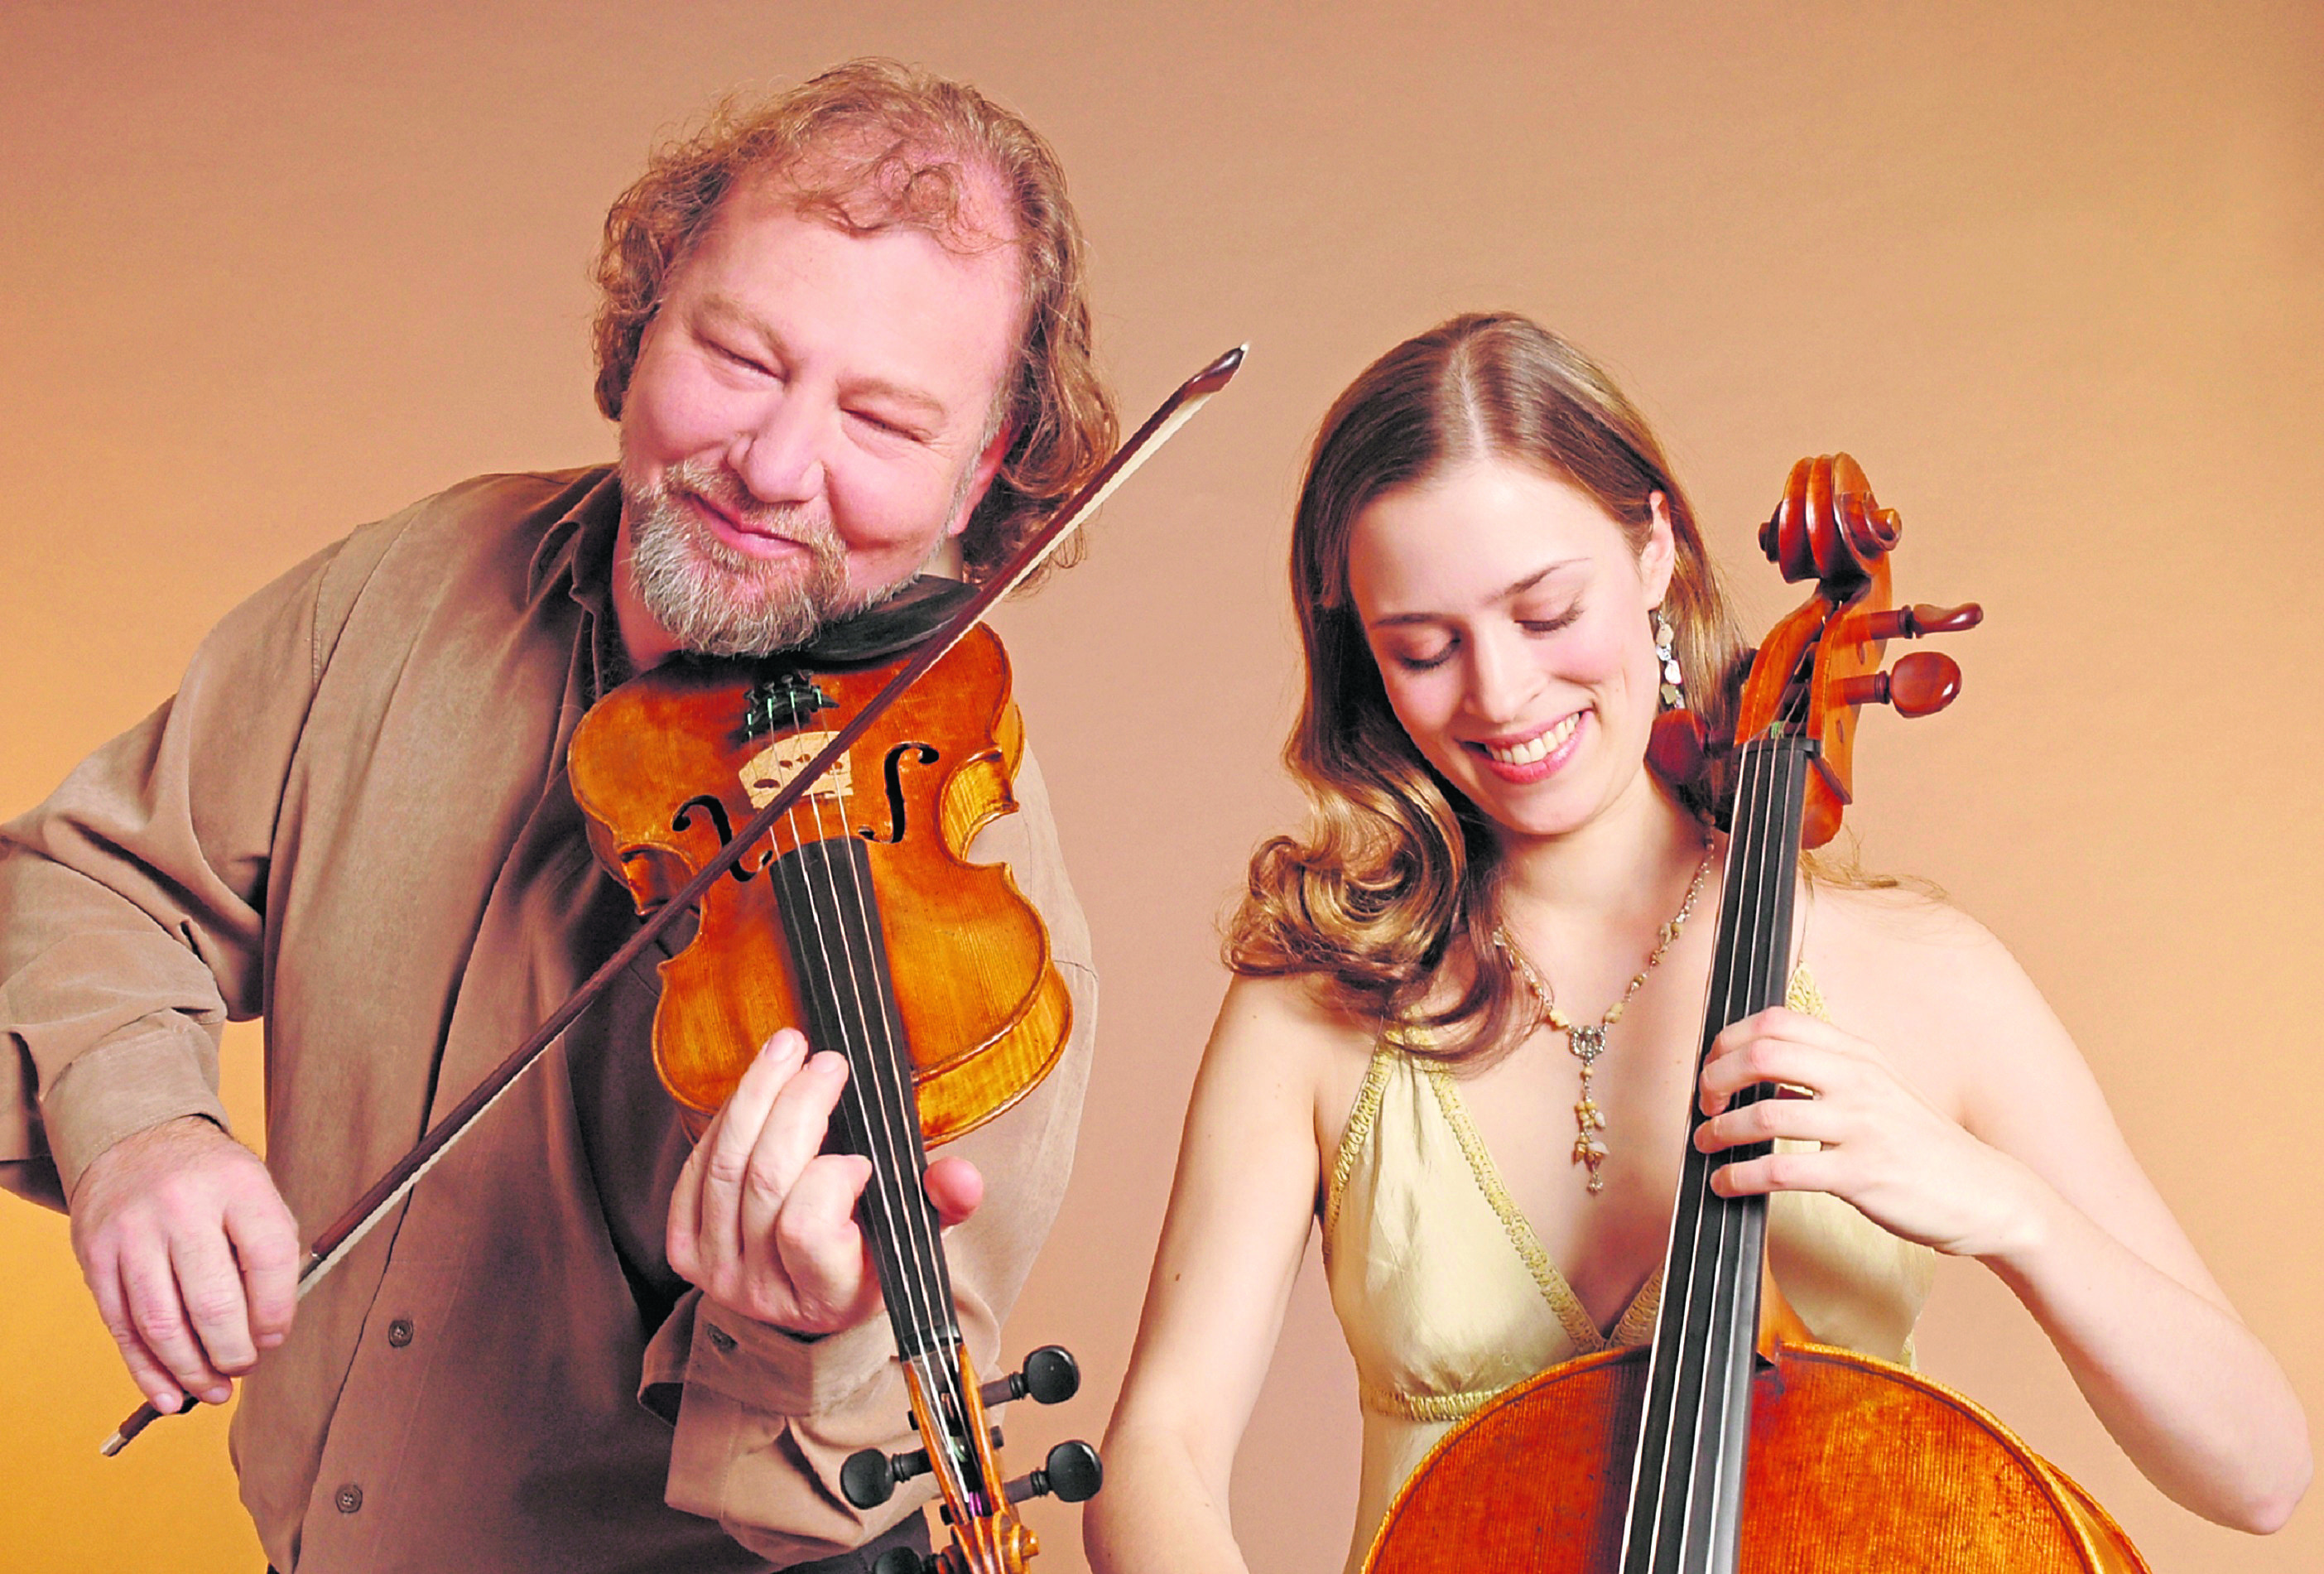 California-based fiddler Alasdair Fraser and cellist Natalie Haas